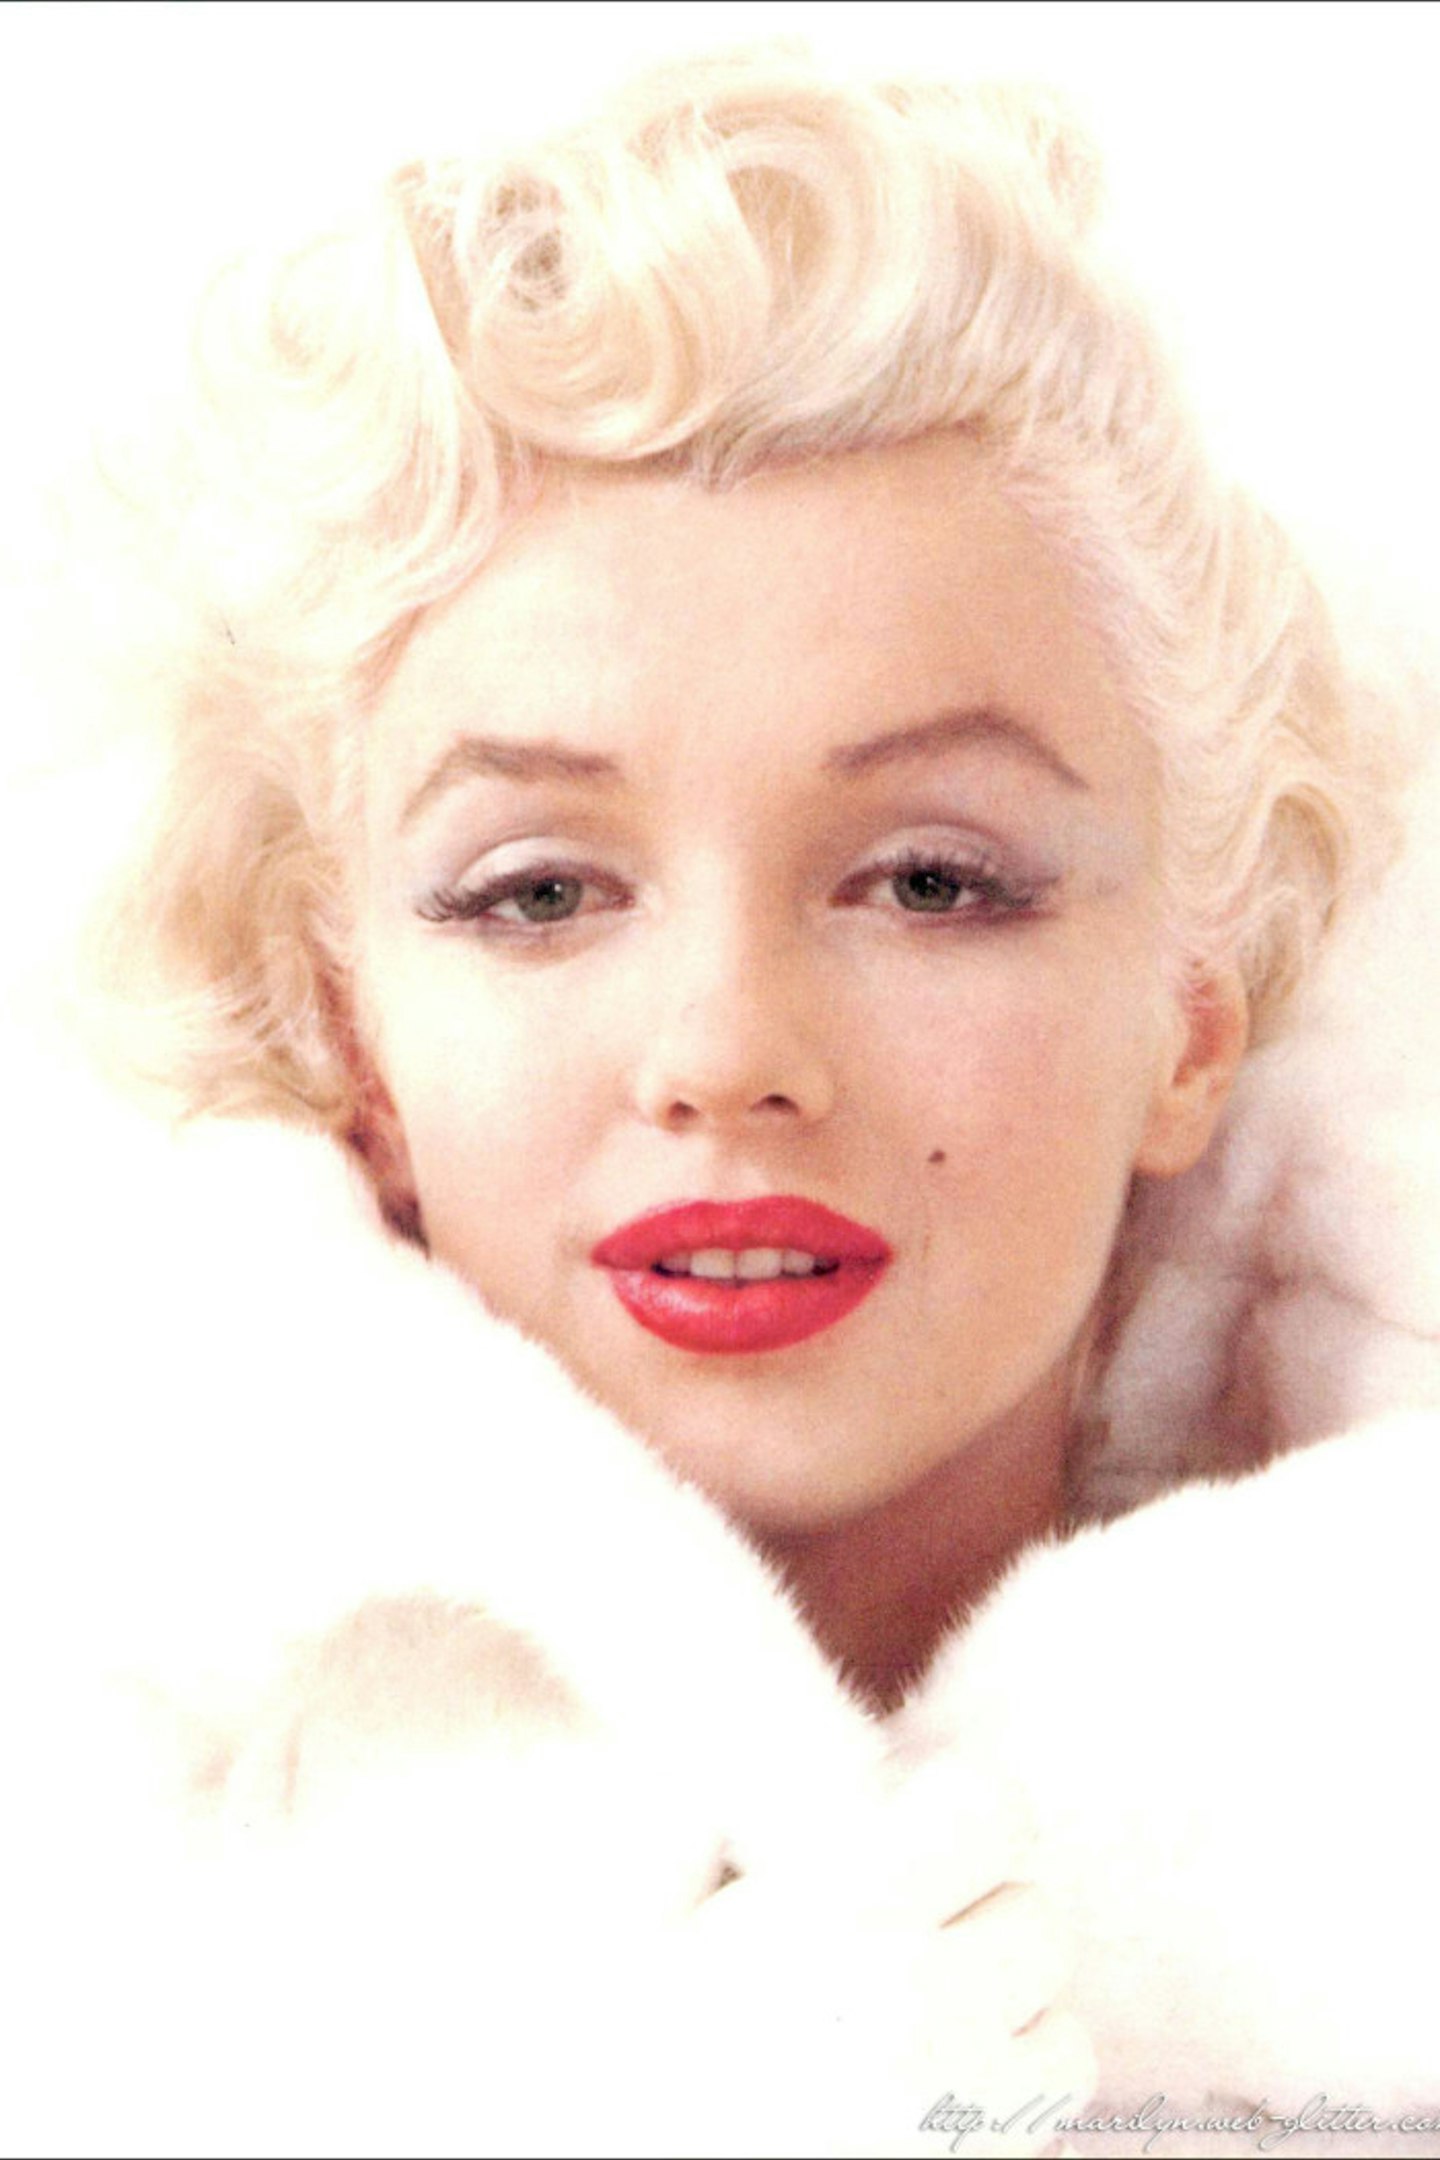 Marilyn Monroe in 1953